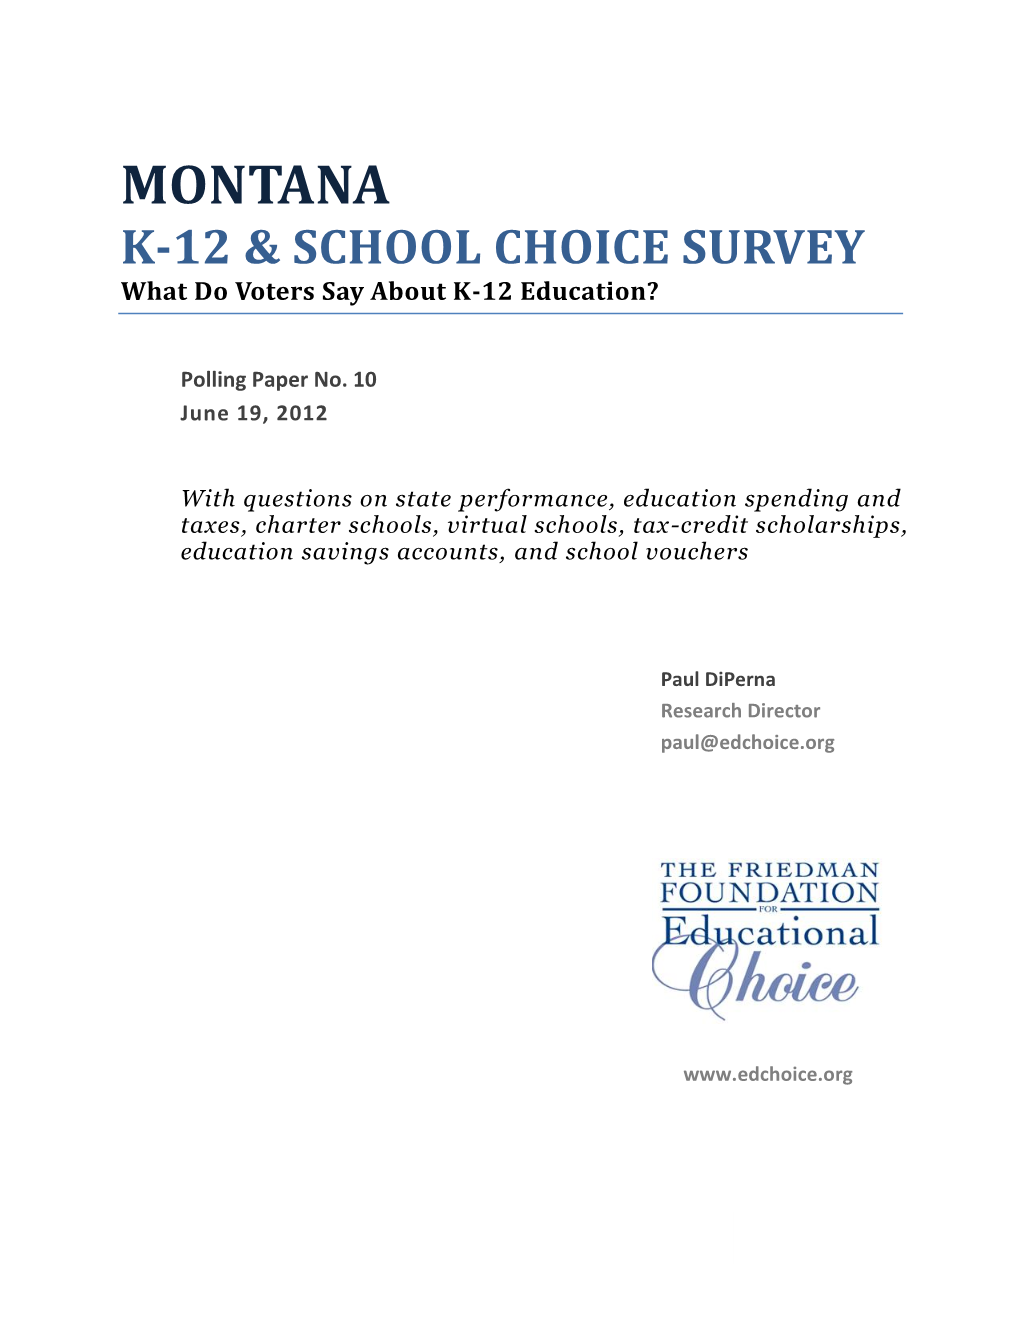 Montana K-12 & School Choice Survey